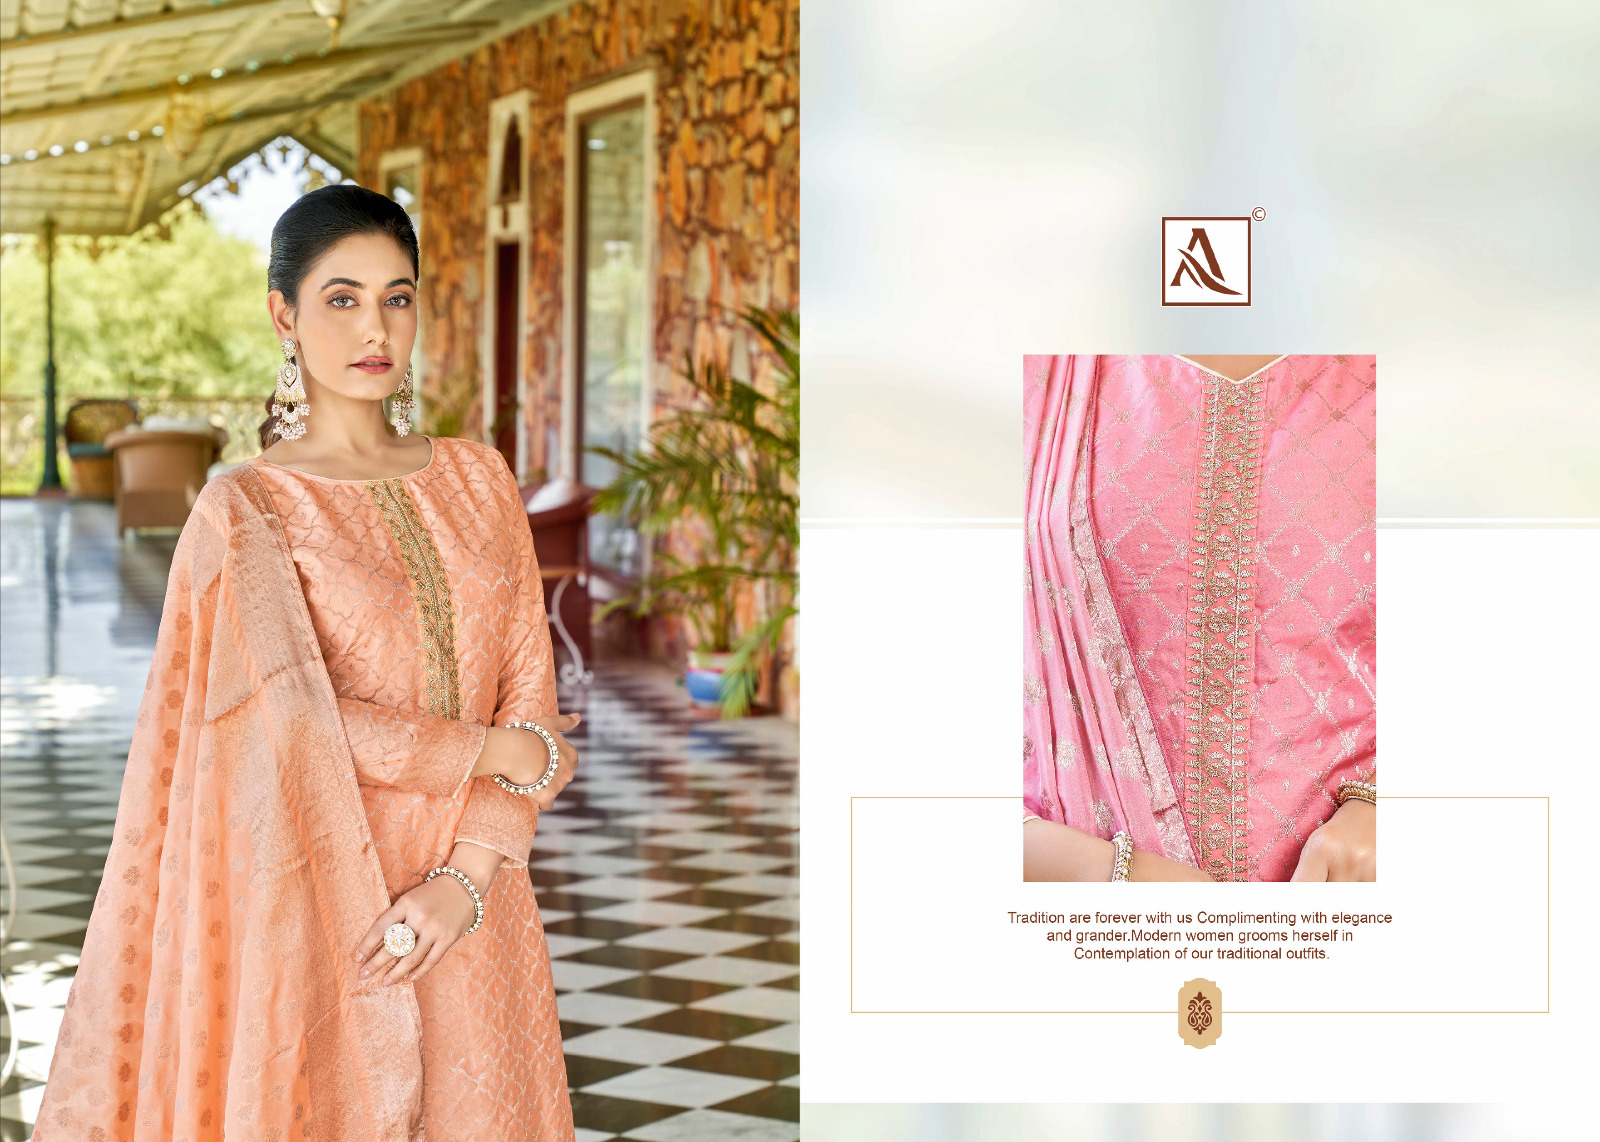 alok suit shahi look jaqurd innovative look salwar suit catalog